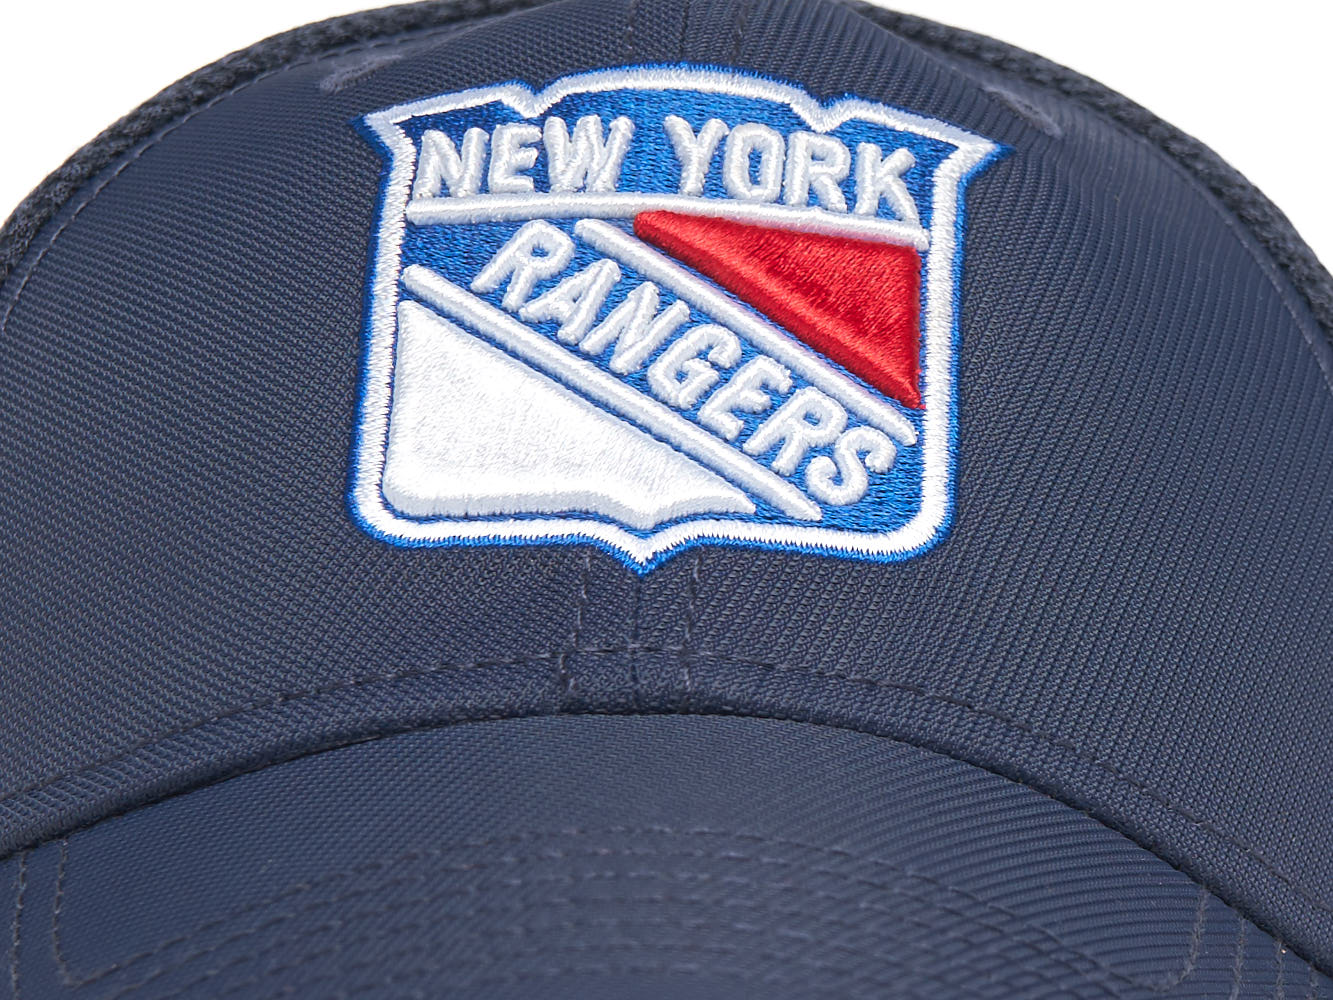  Atributika & club NHL New York Rangers 31306 SR